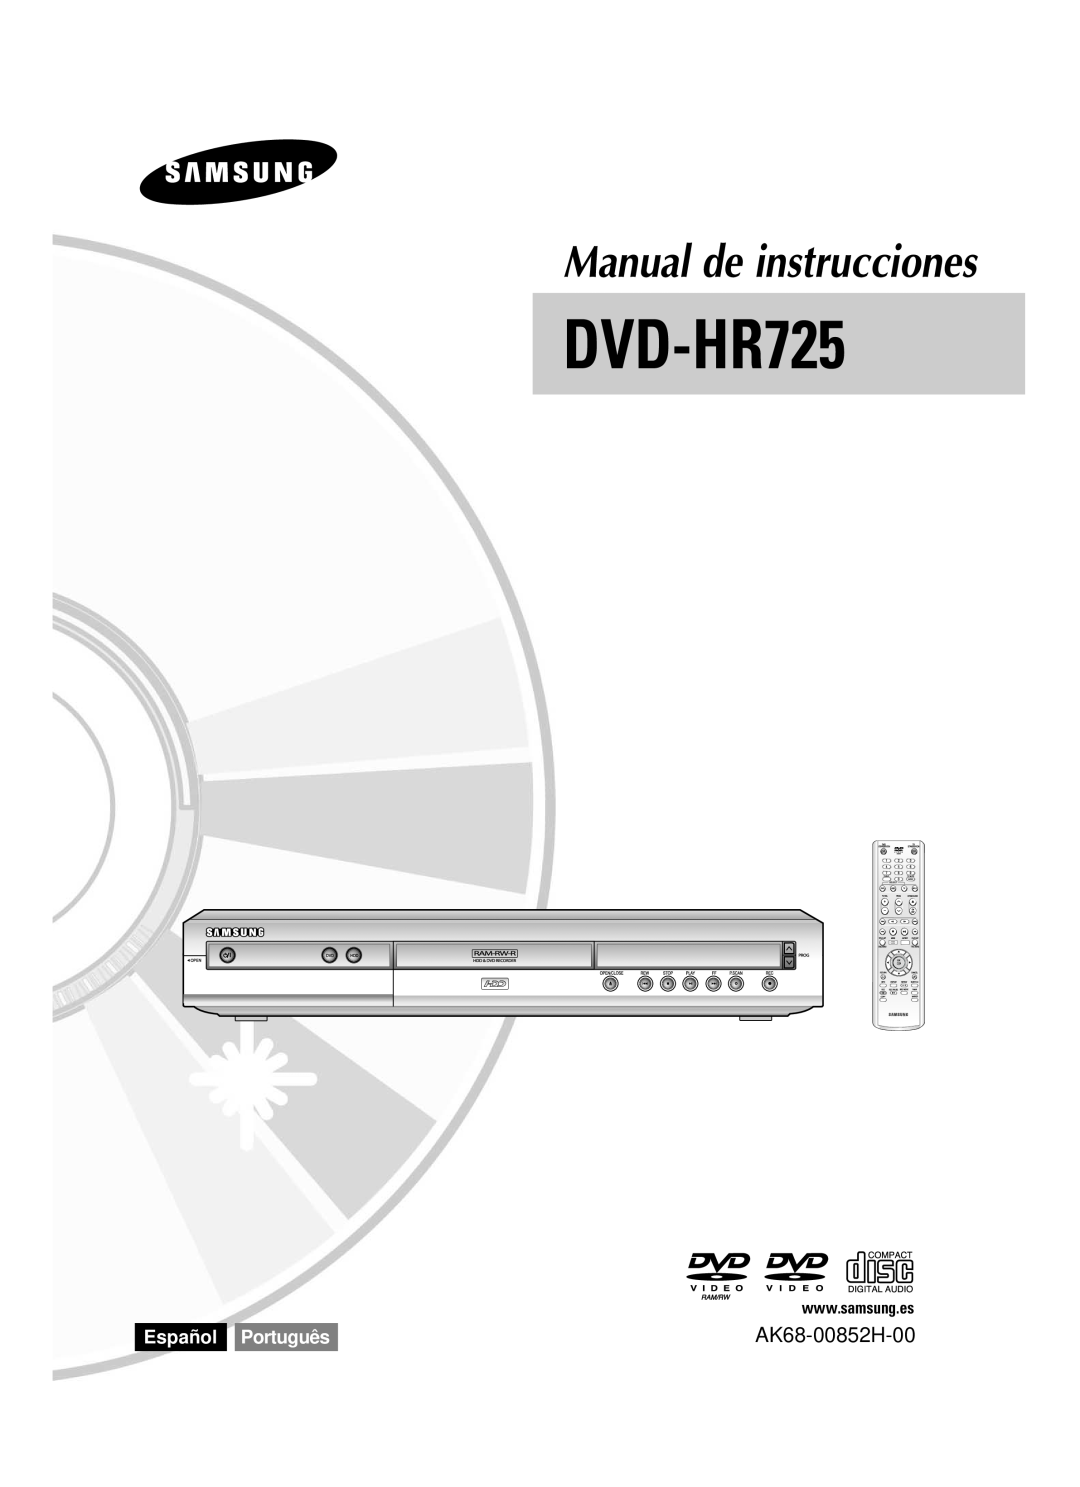 Samsung DVD-HR725/XEF, DVD-HR725/XEG, DVD-HR725/XET manual AK68-00852H-00, Español Português, Manual de instrucciones 